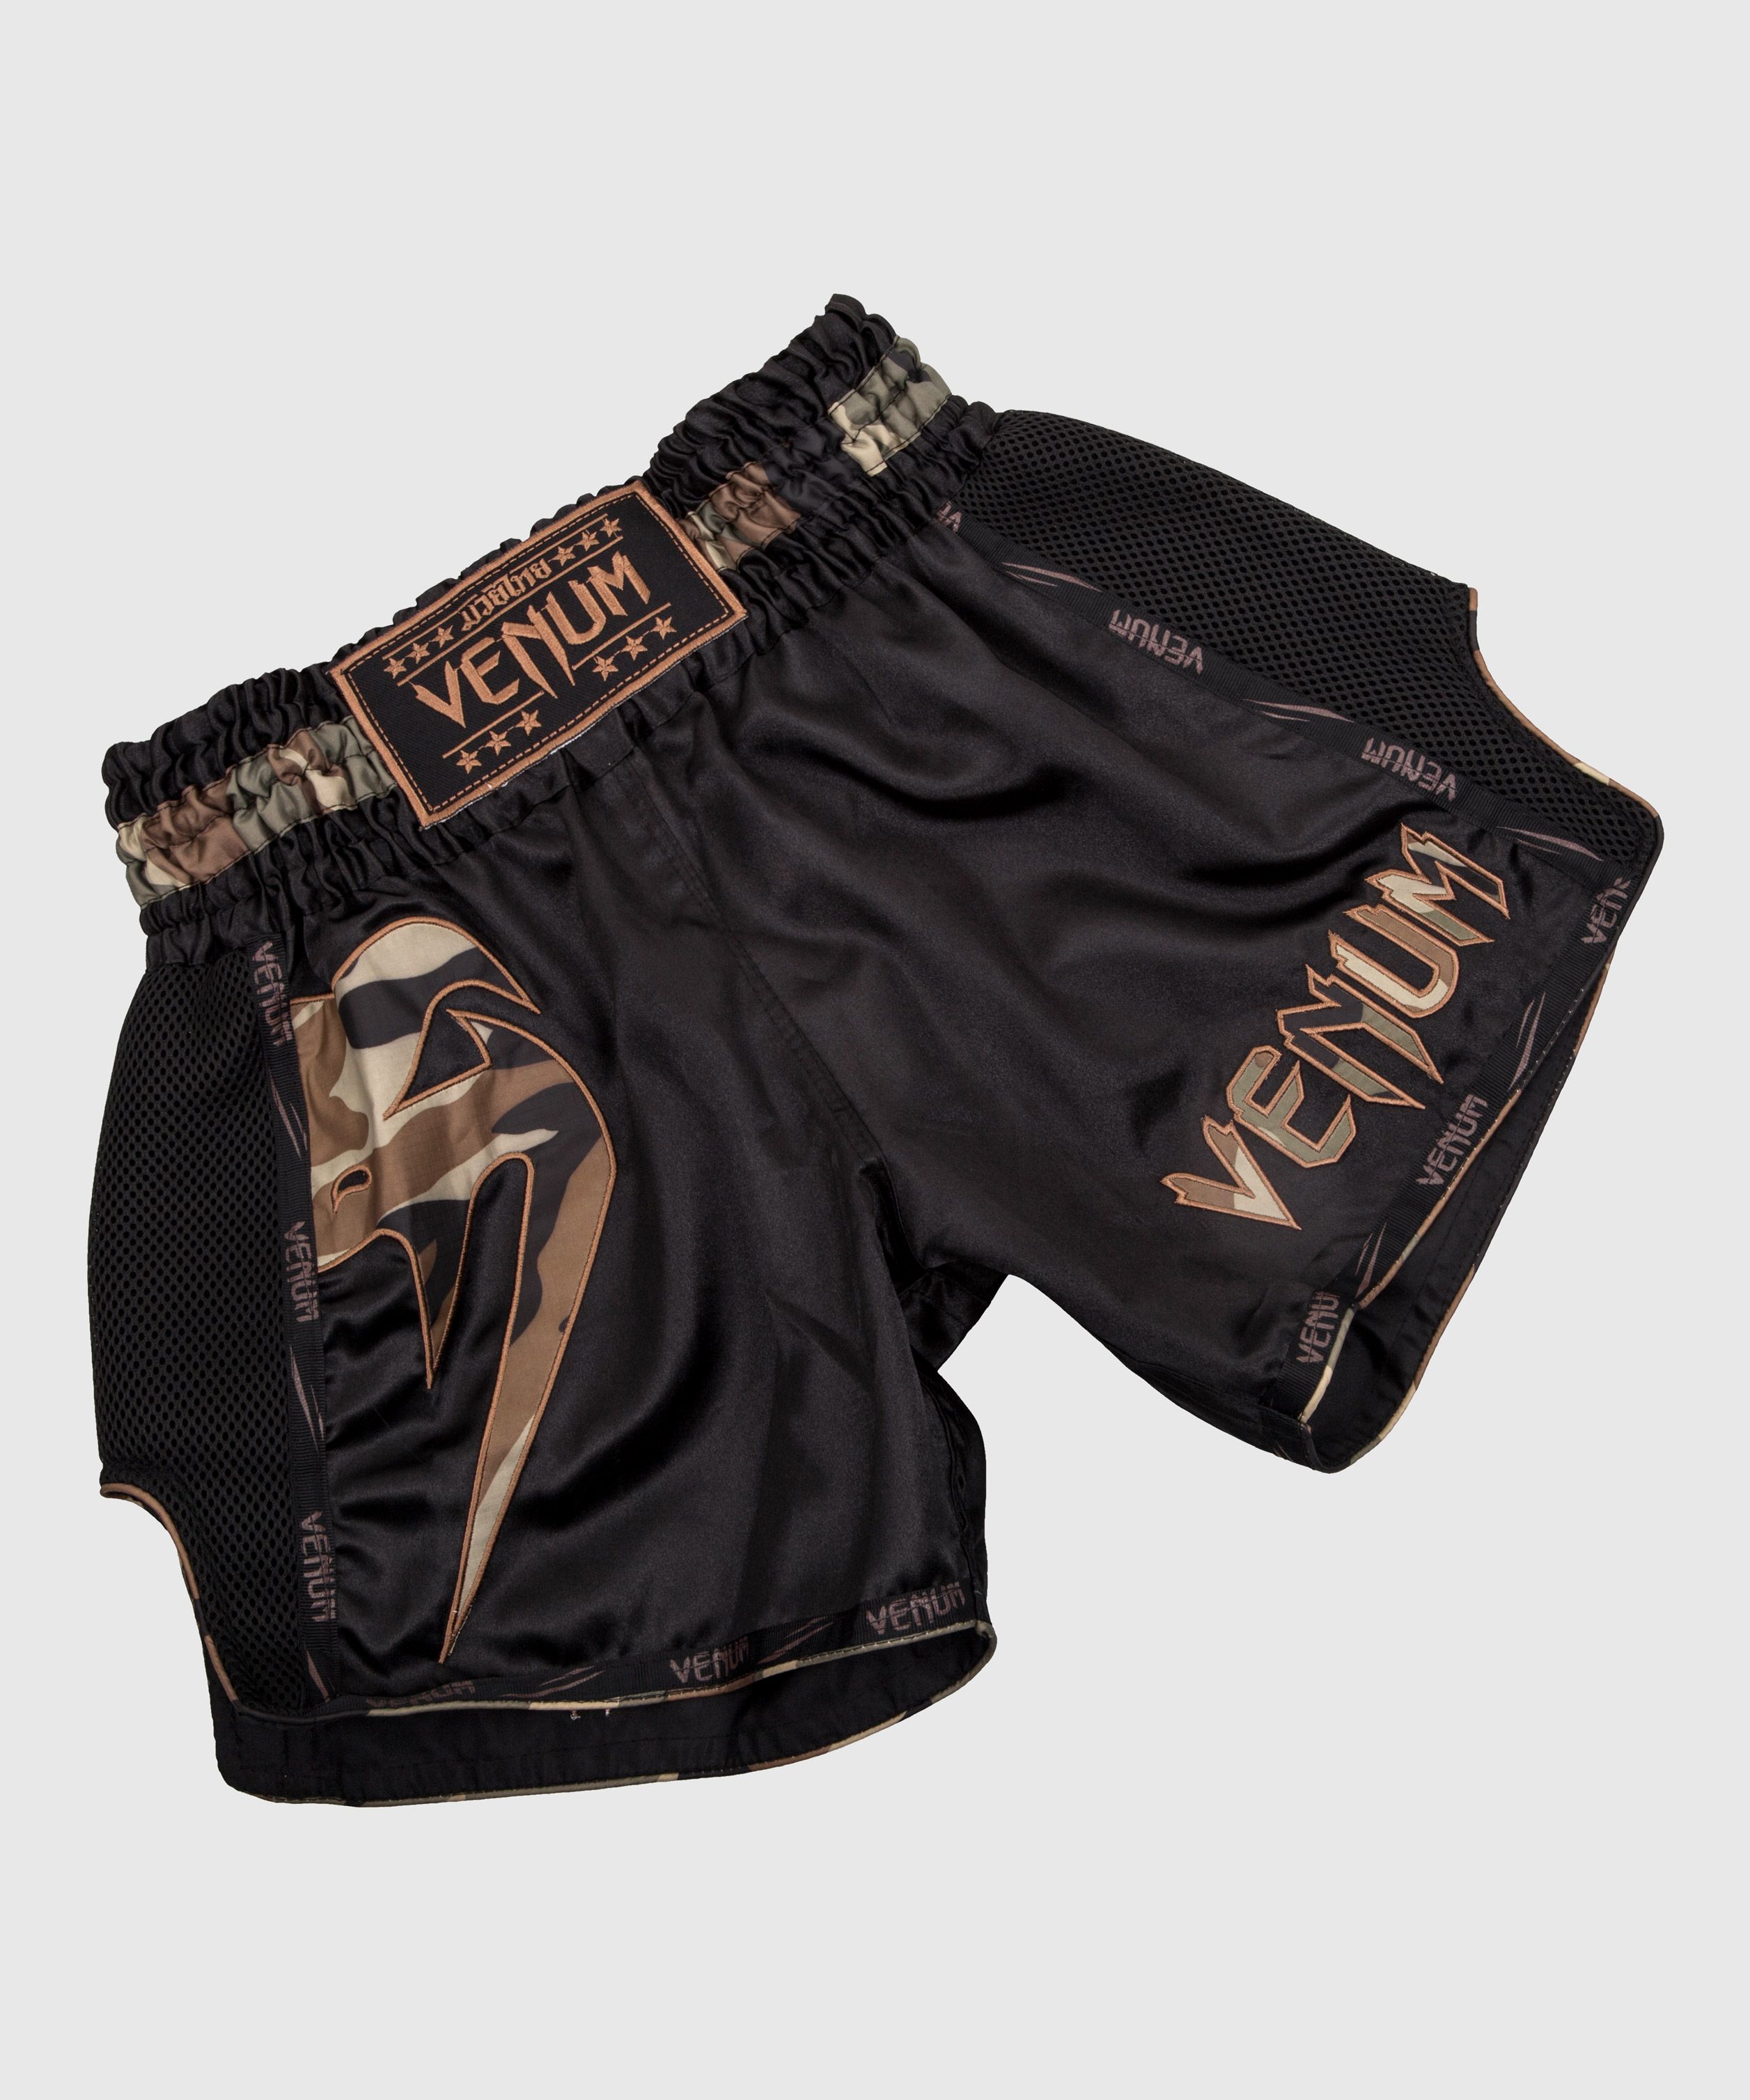 Pantalones Cortos de Muay Thai Venum Giant - Negro/Bosque Camo